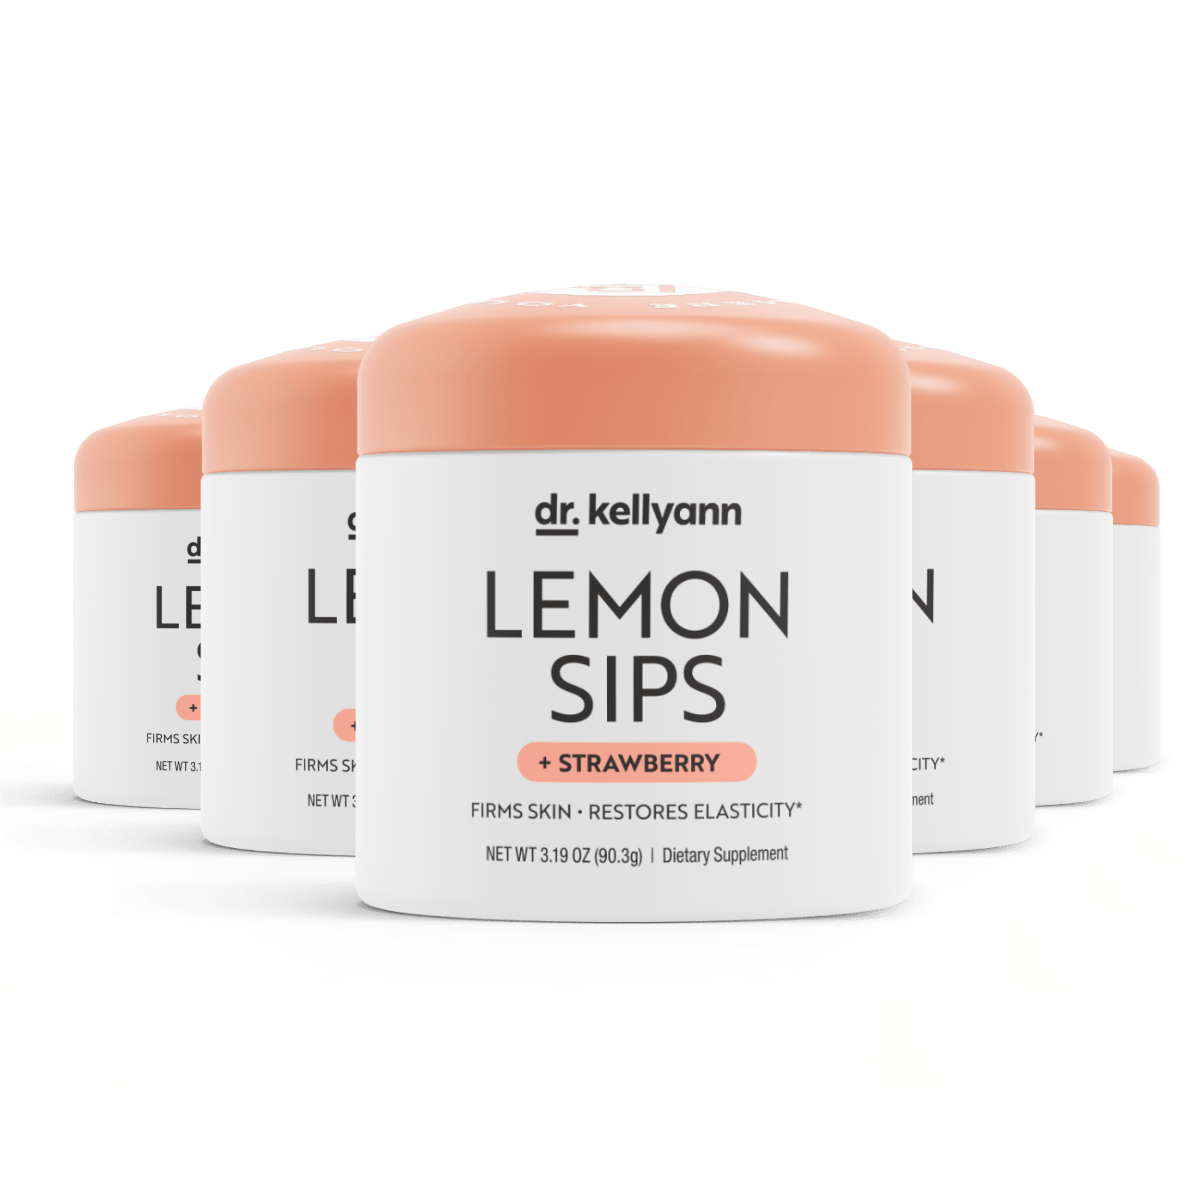 Lemon Sips - Strawberry